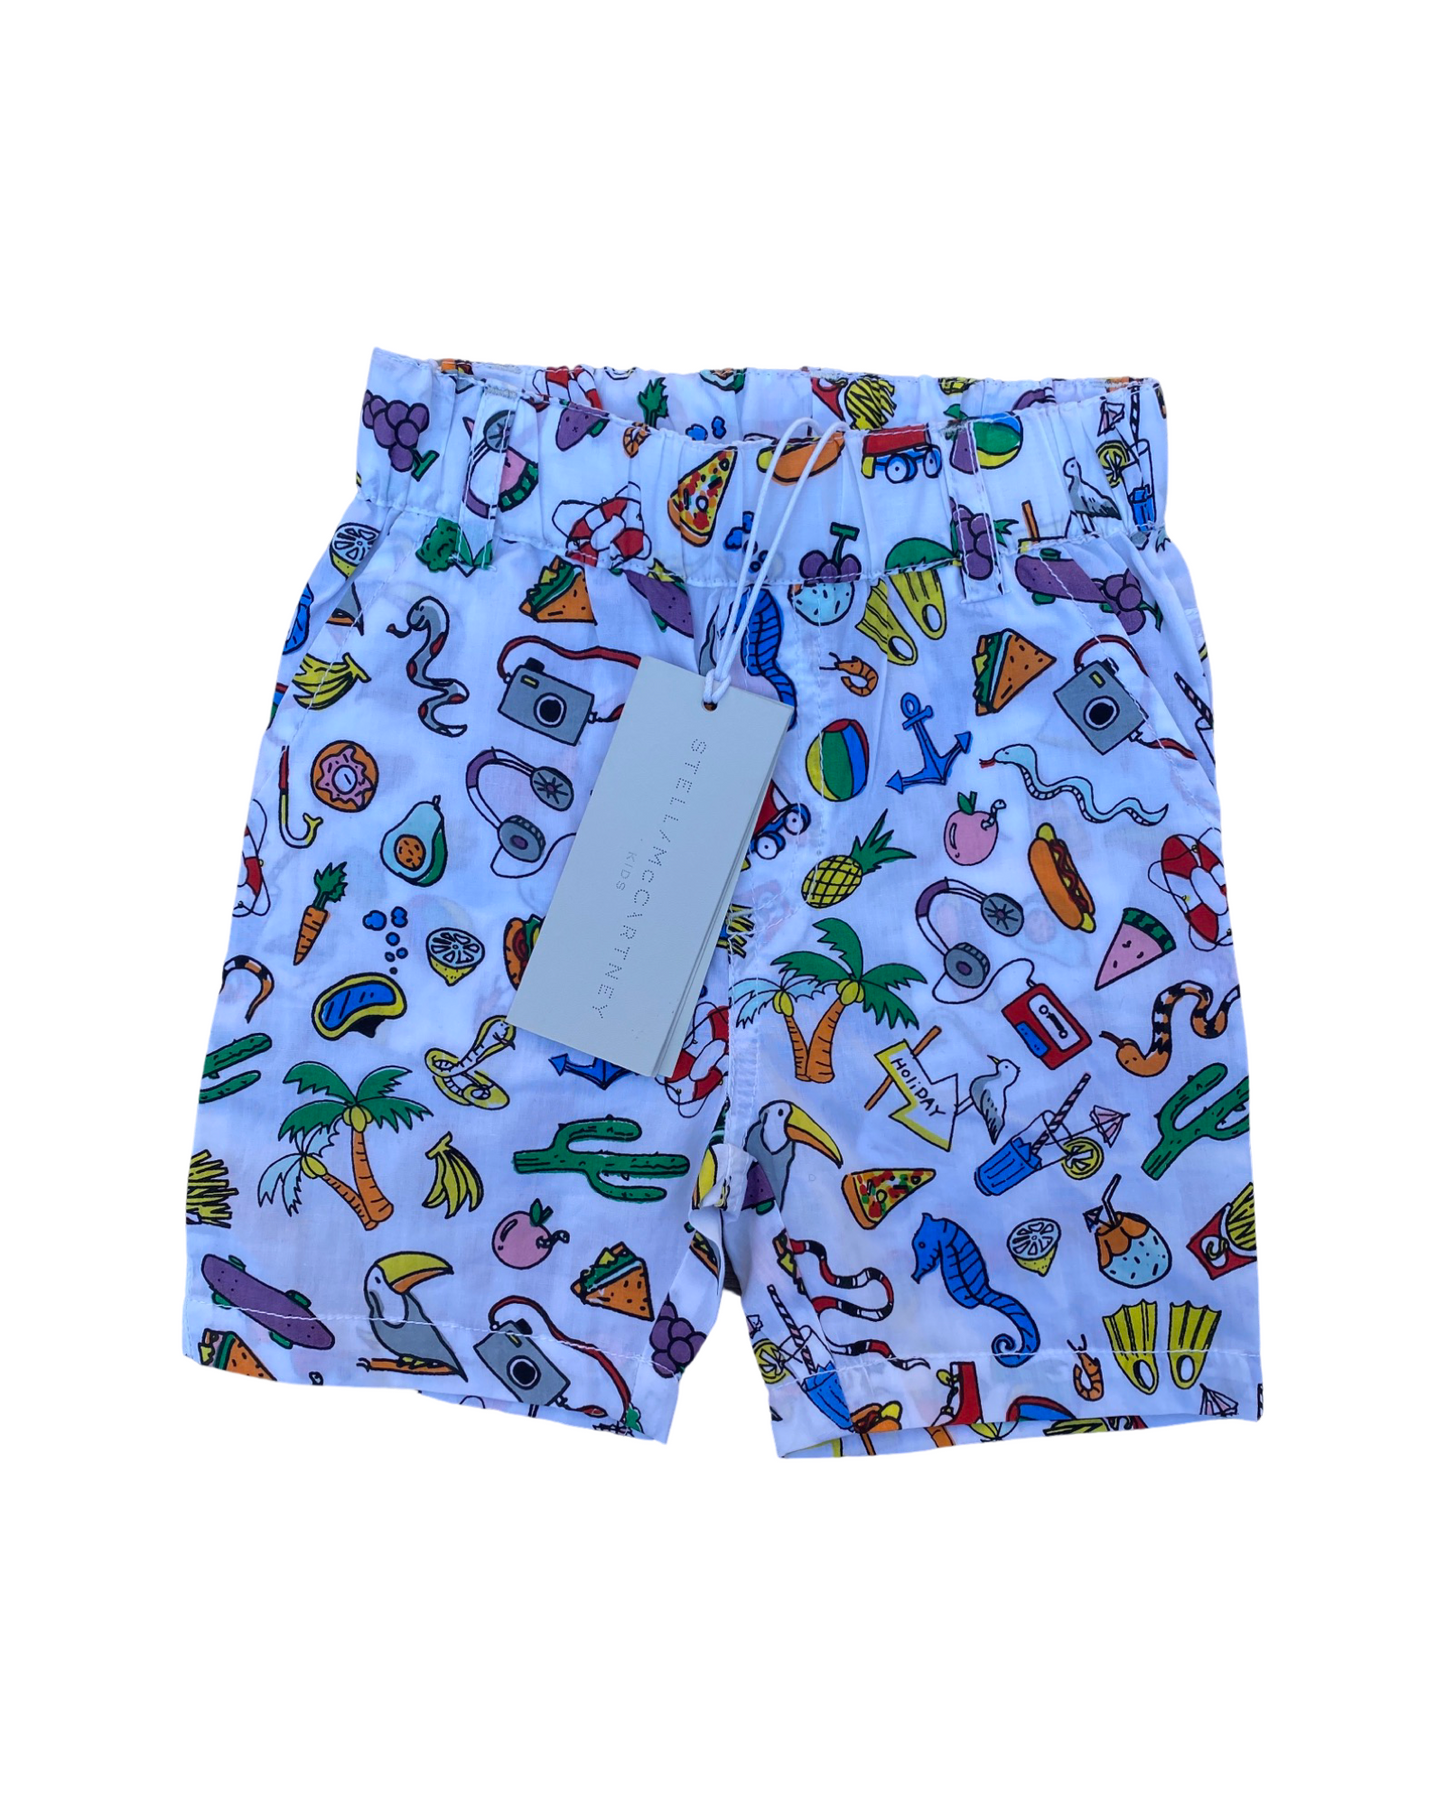 Stella McCartney holiday print cotton baby shorts (9-12mths)